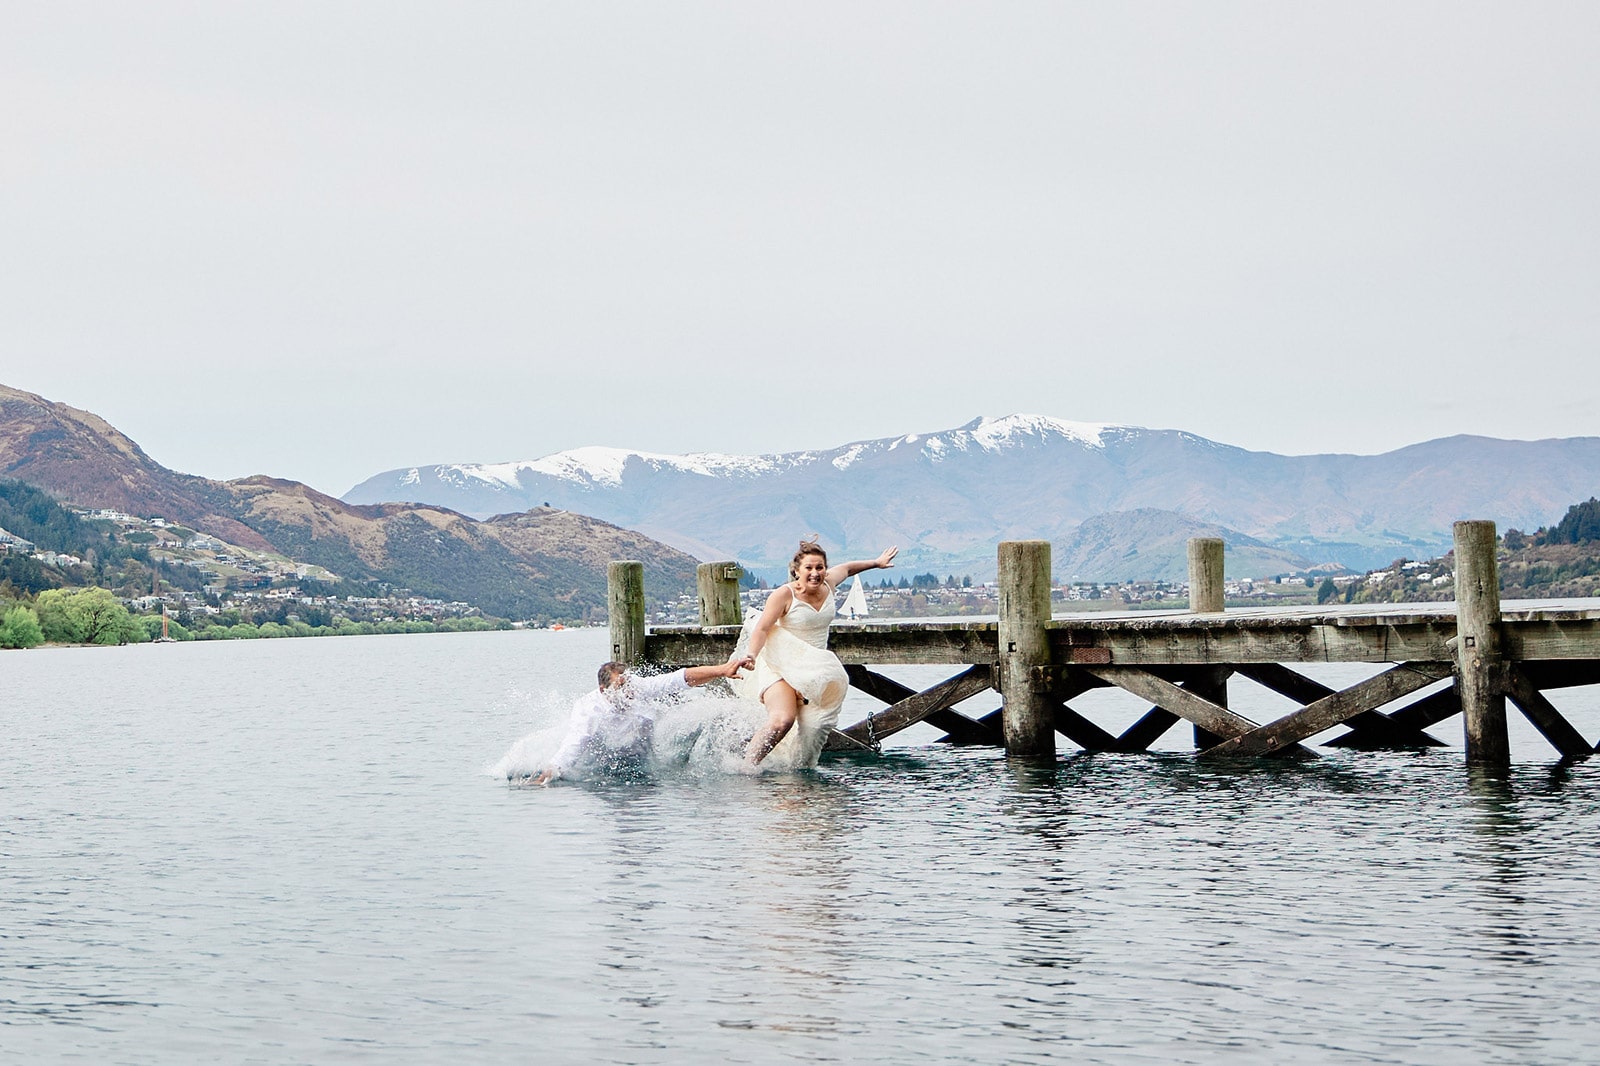 Wedding couple jump into the lake